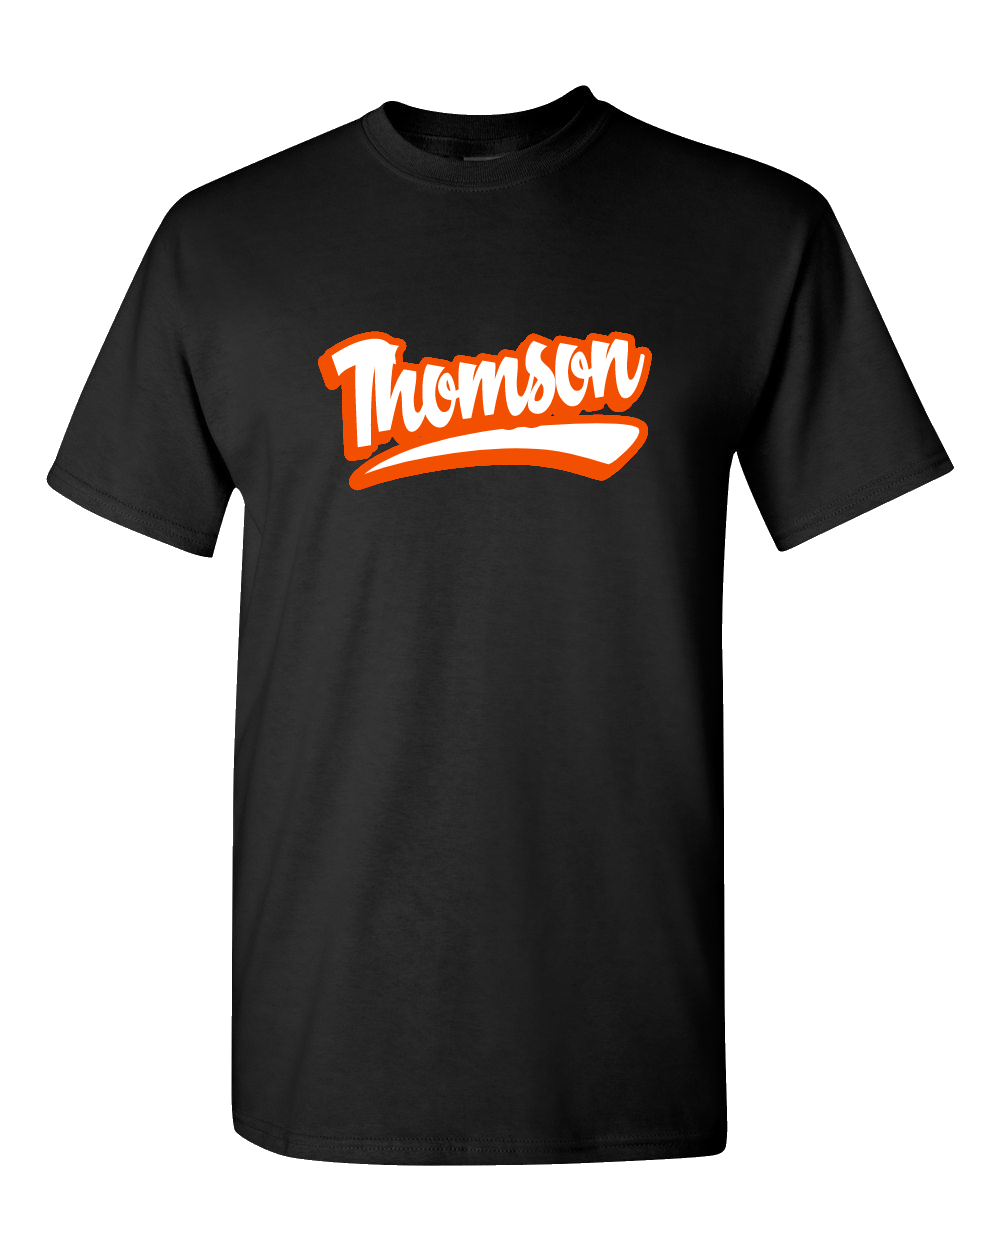 THOMSON Tee